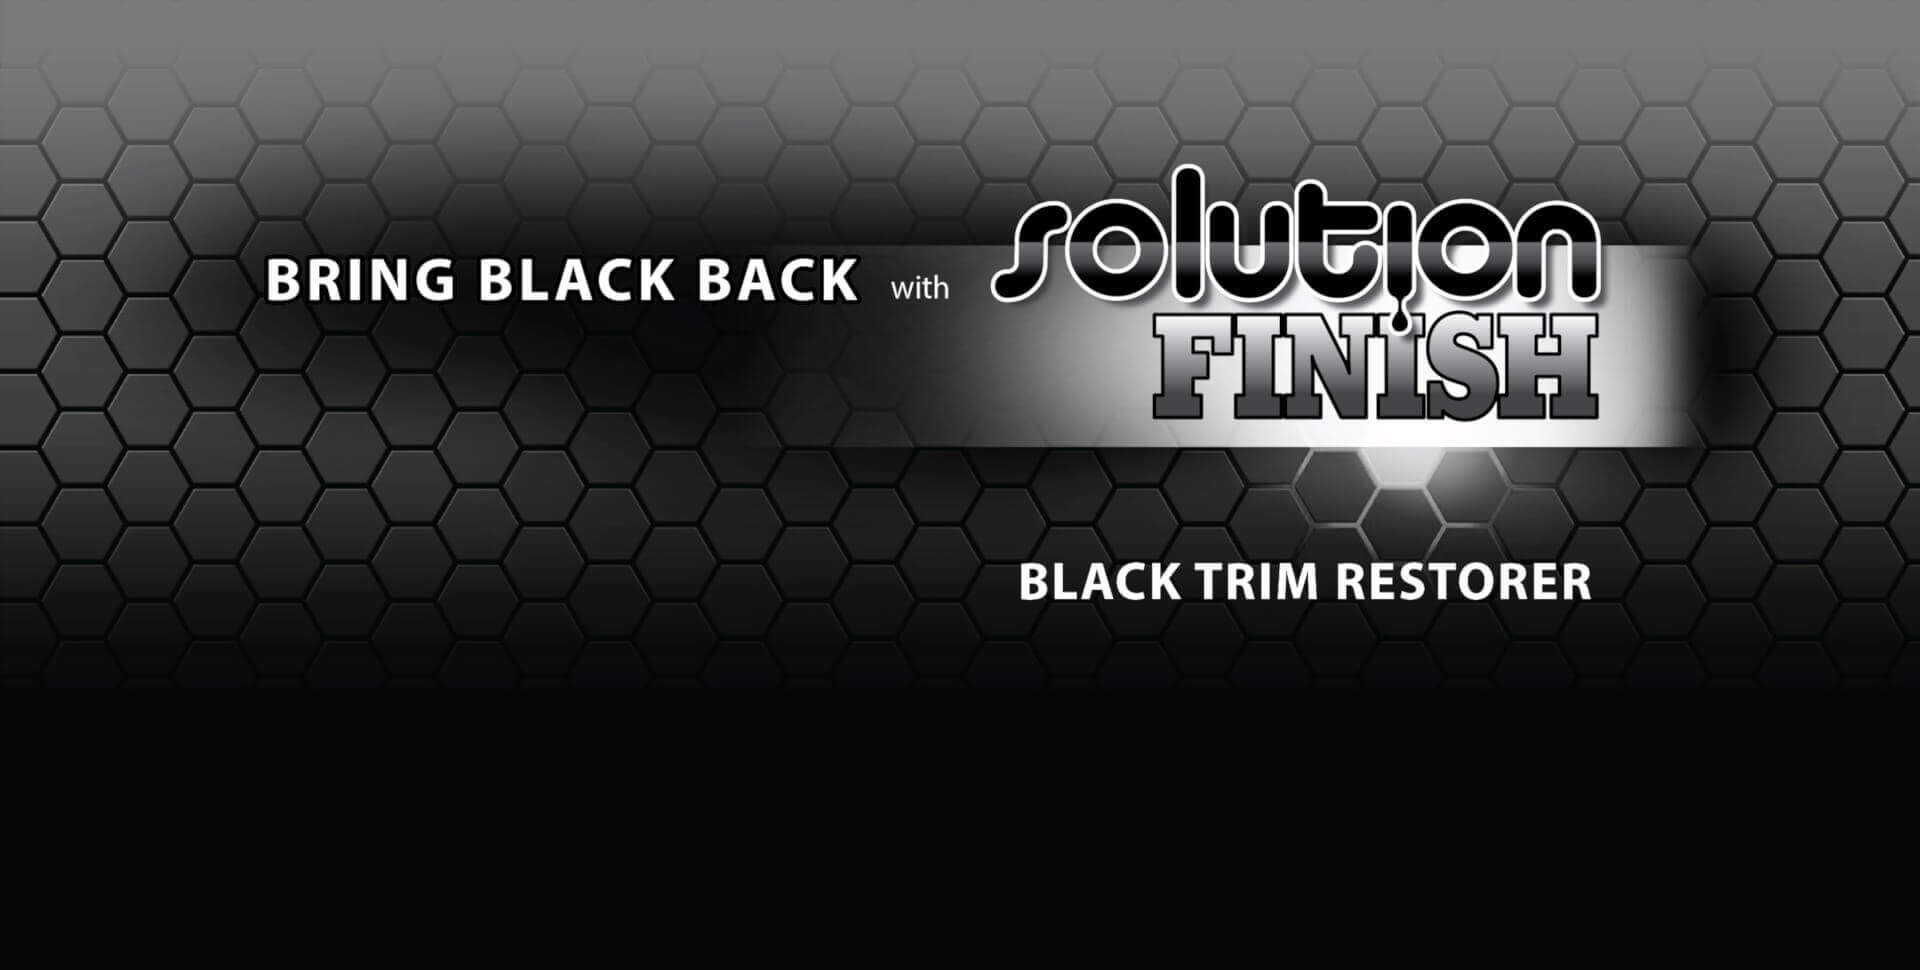 Solution Finish Black Trim Restorer with Microfiber Applicators